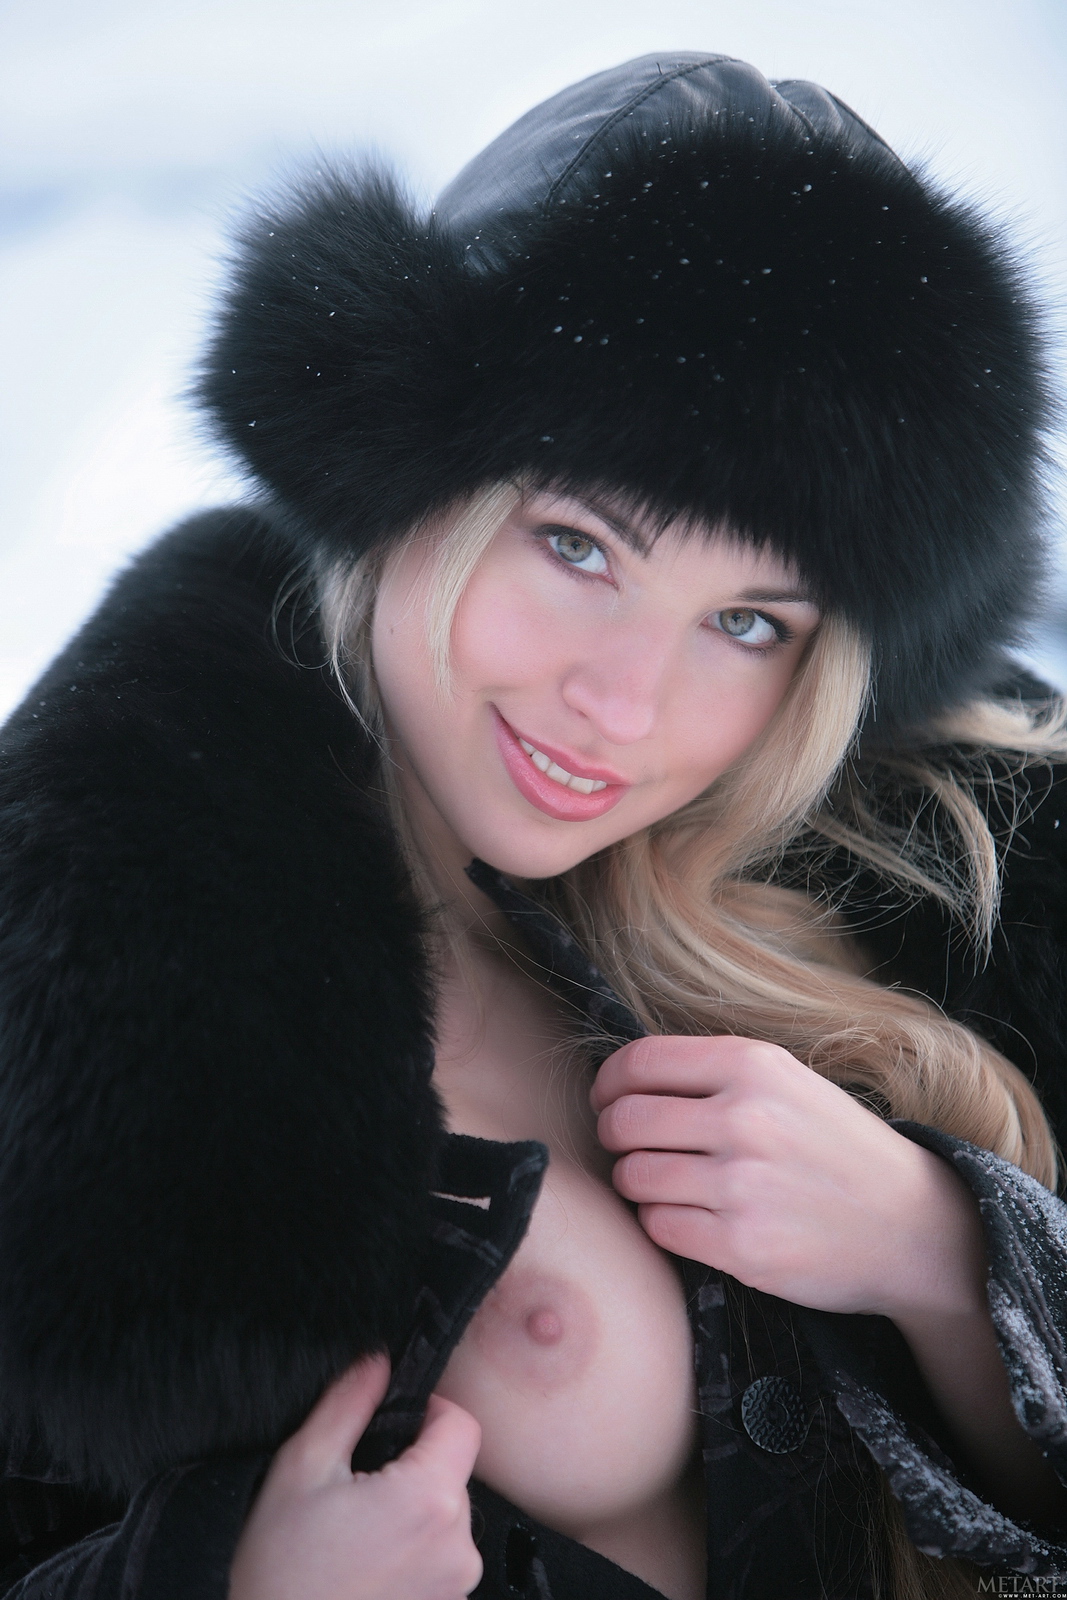 natalia-b-snow-nude-blonde-winter-fur-hat-metart-34